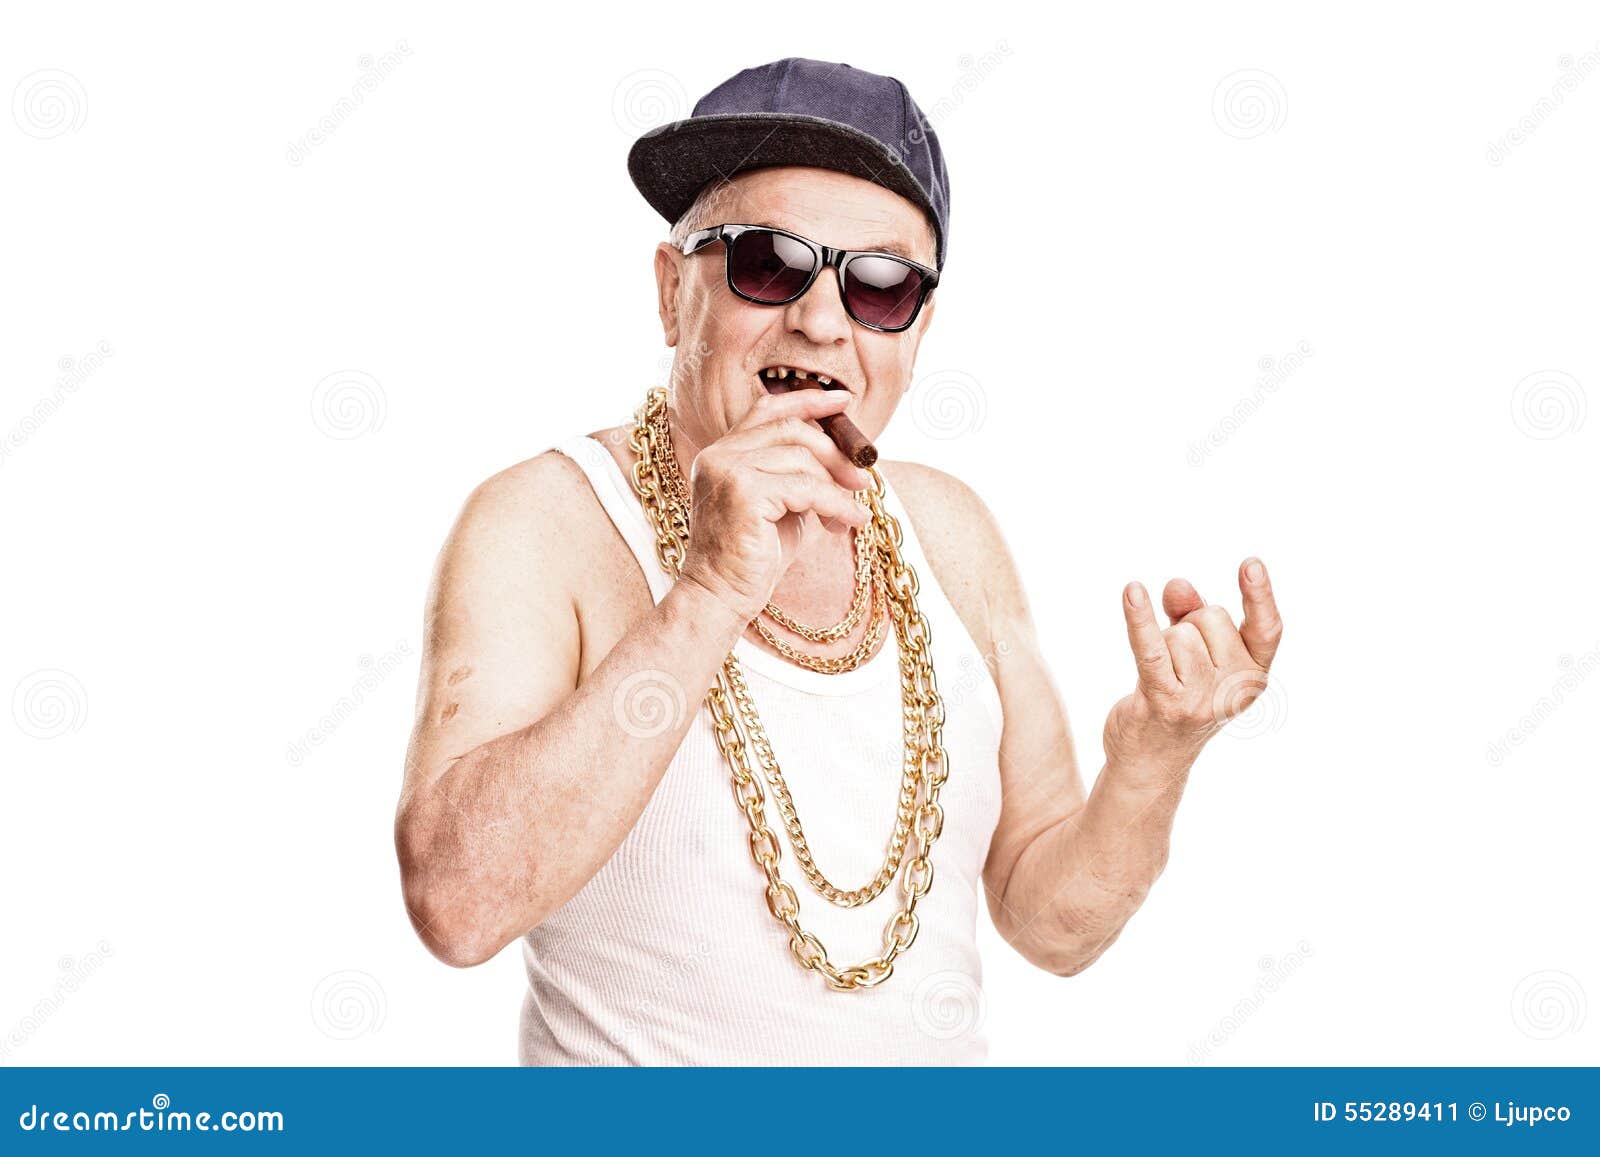 senior-rapper-smoking-cigar-making-hand-sign-toothless-hardcore-his-isolated-white-background-55289411.jpg